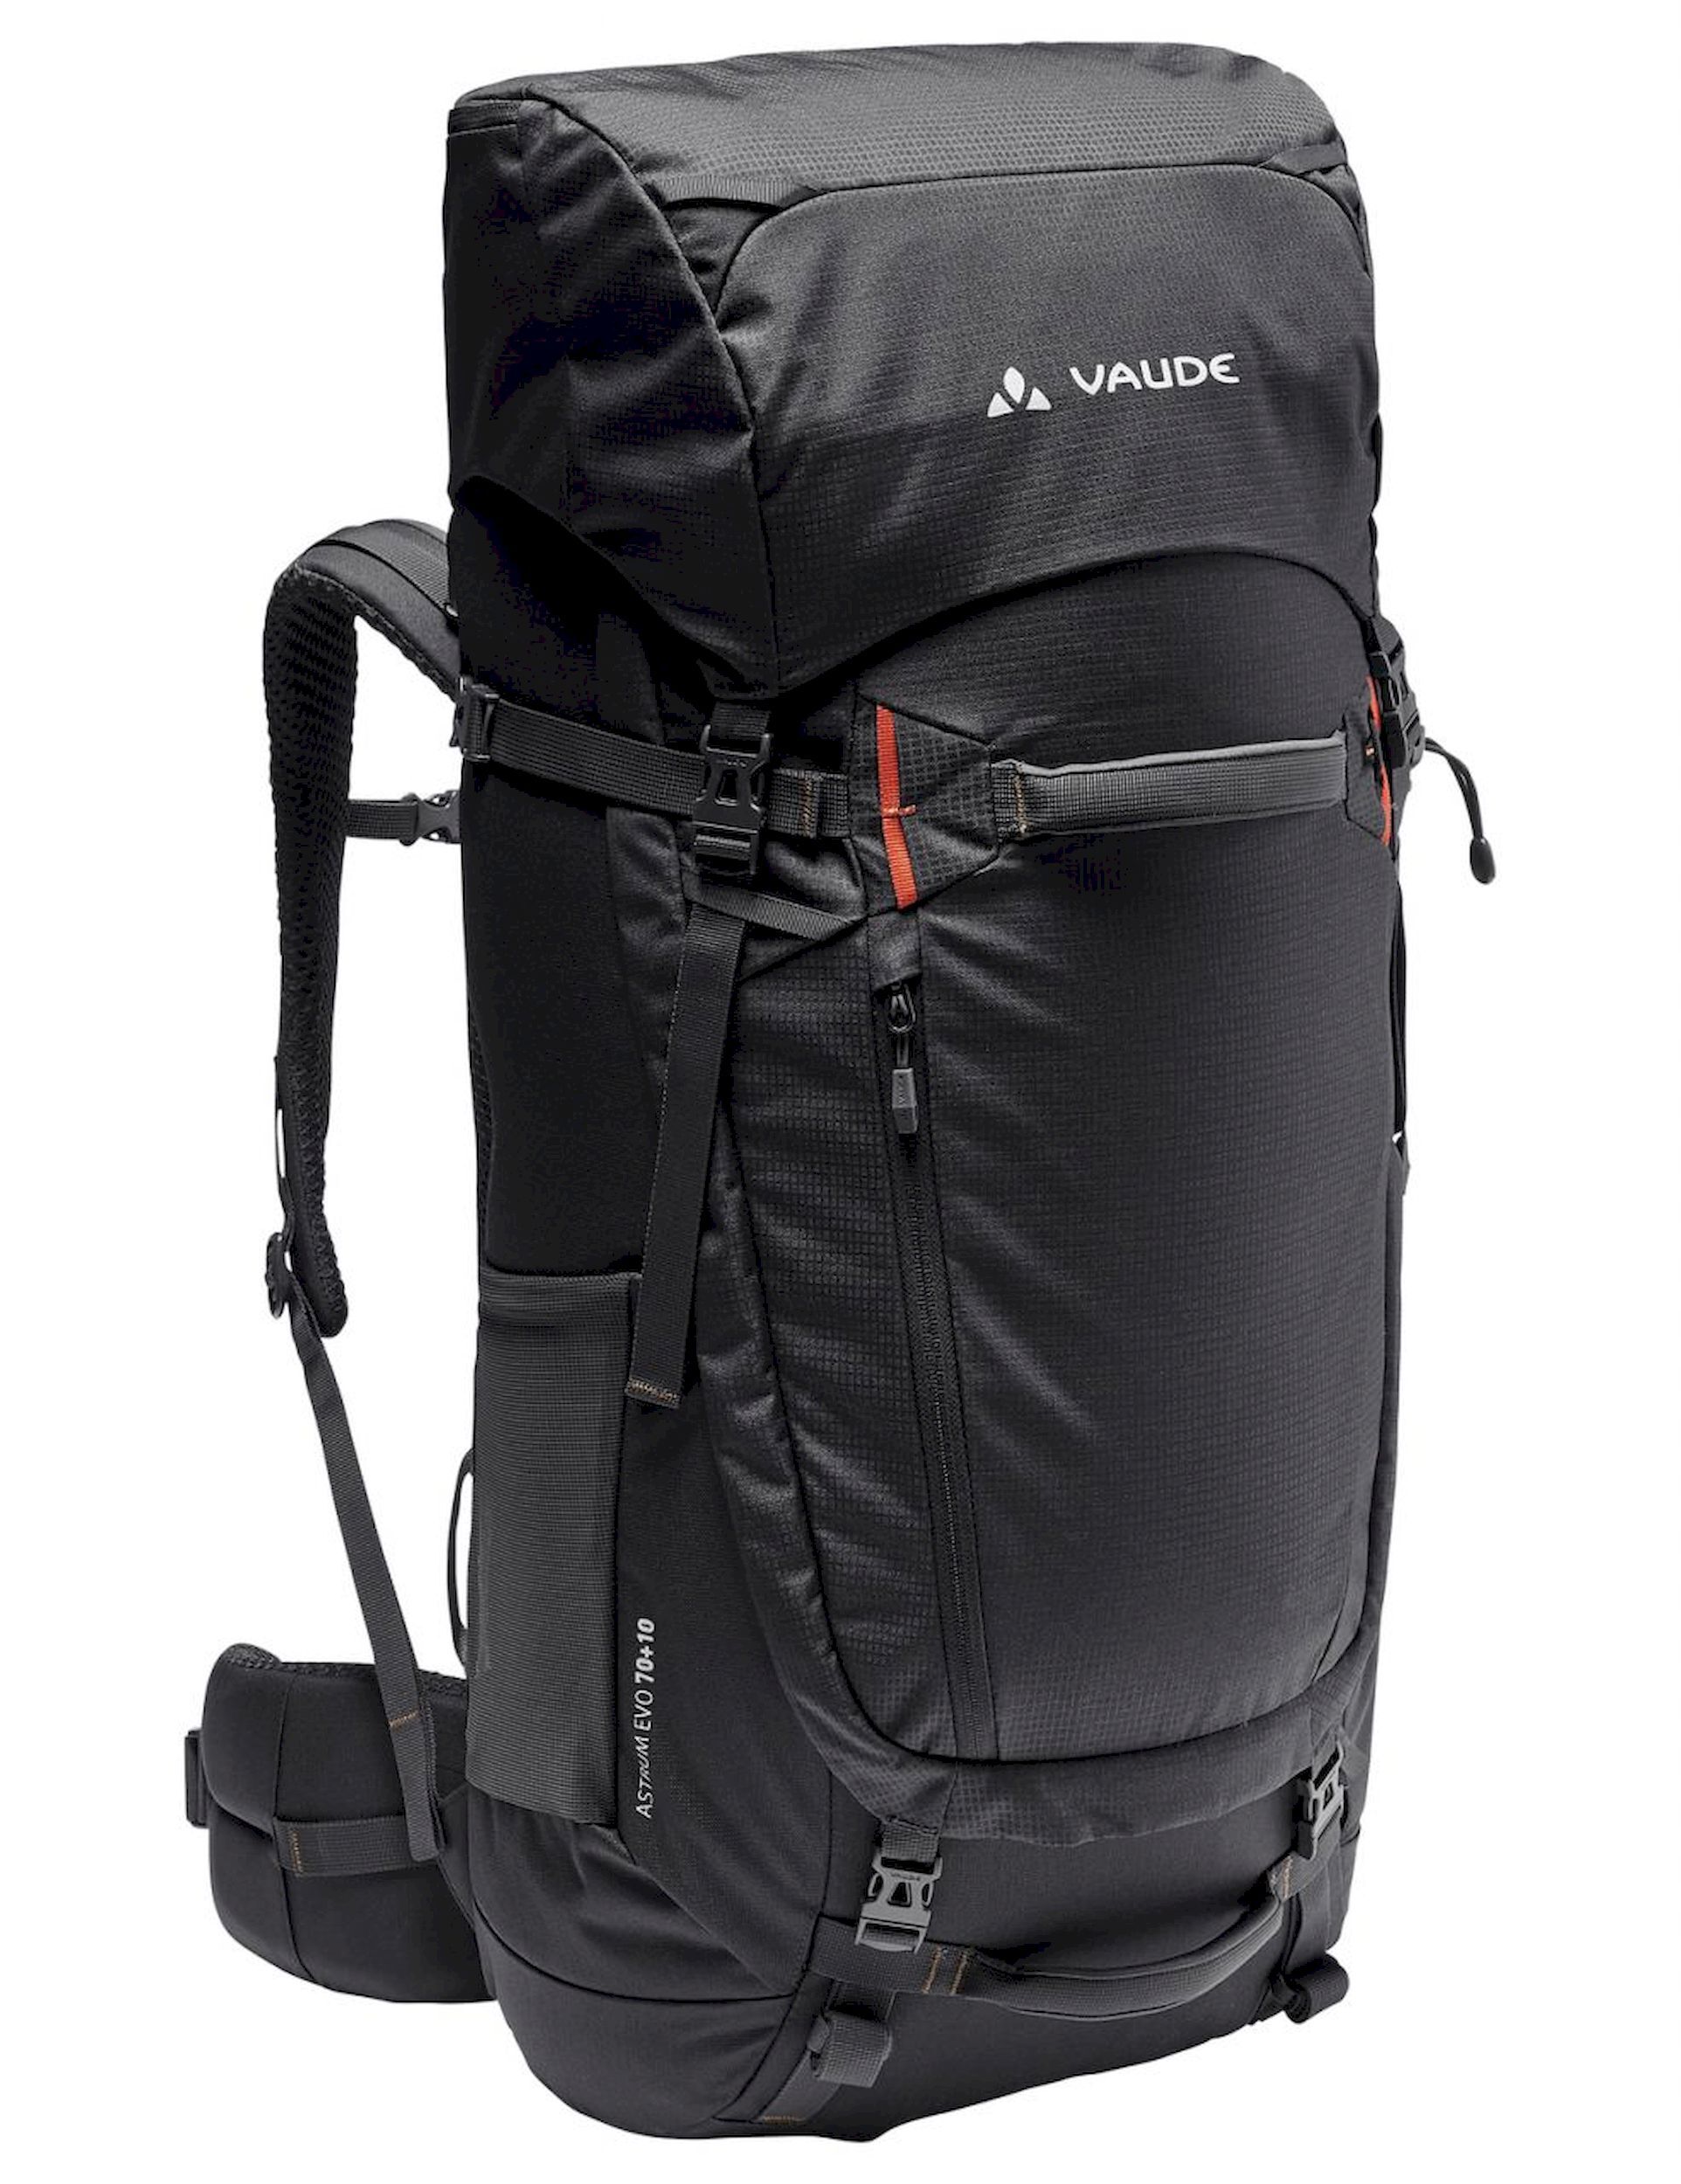 Vaude Astrum EVO 70+10 - Travel backpack